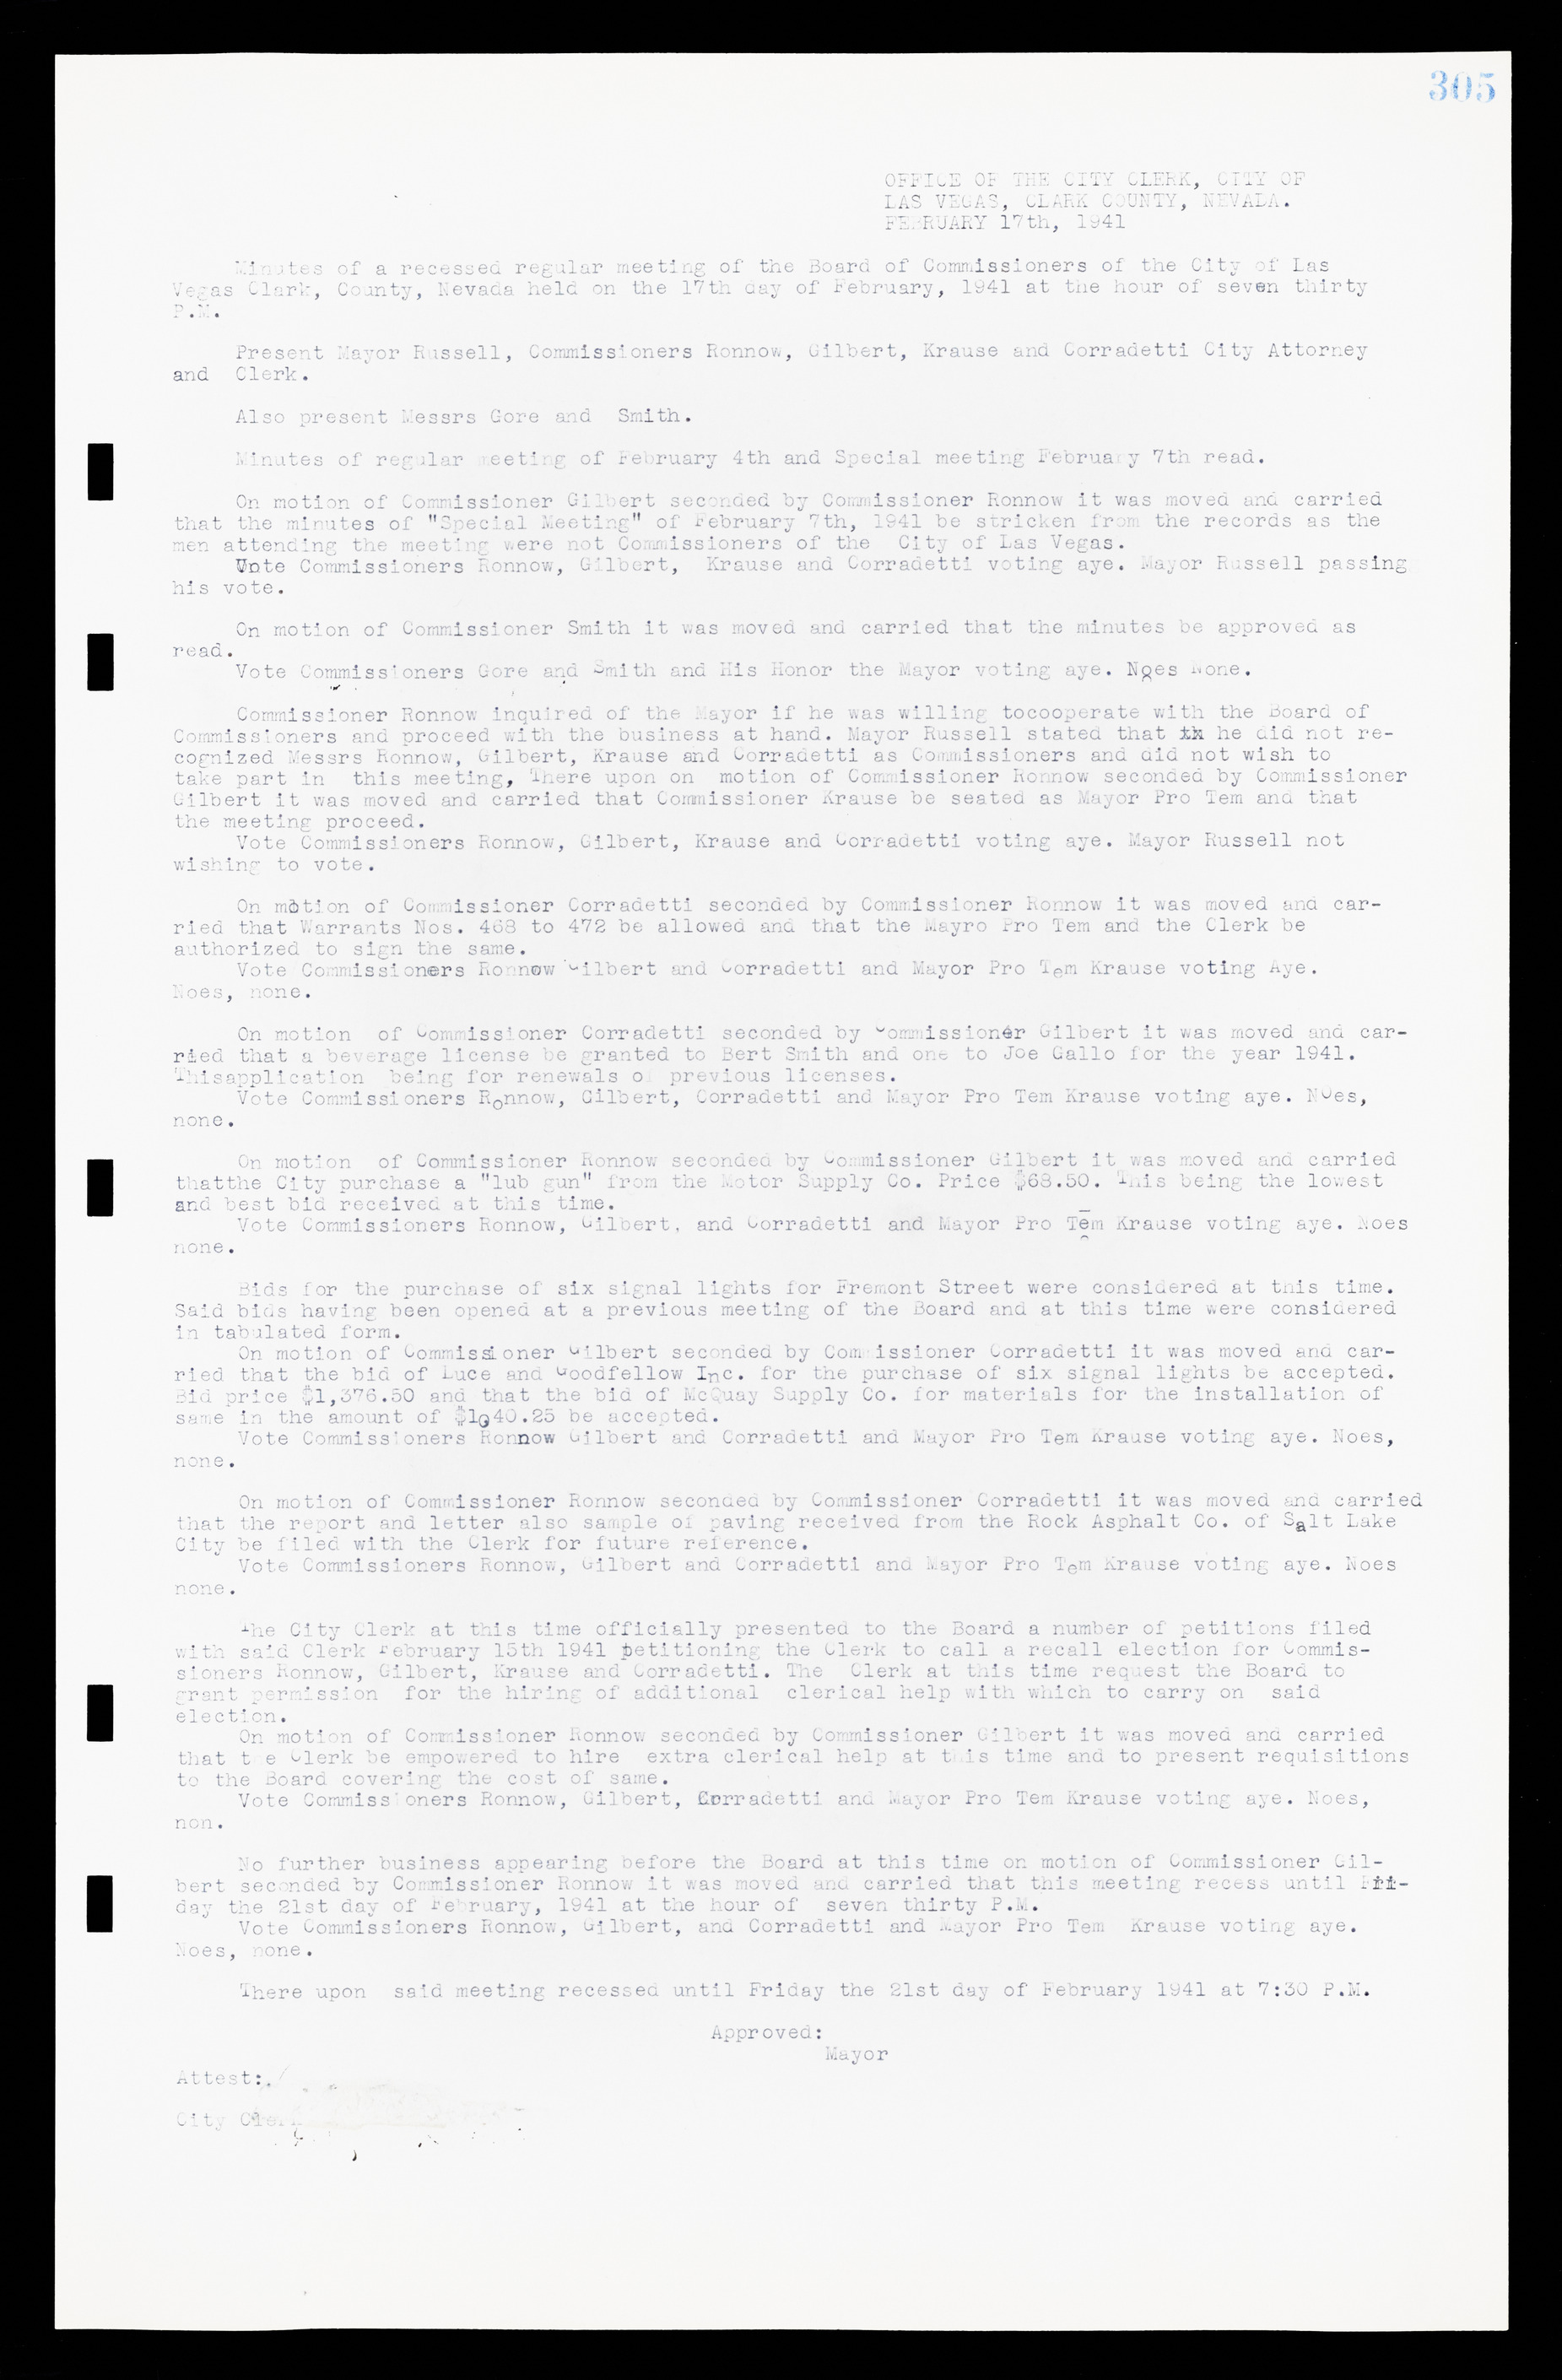 Las Vegas City Commission Minutes, February 17, 1937 to August 4, 1942, lvc000004-329